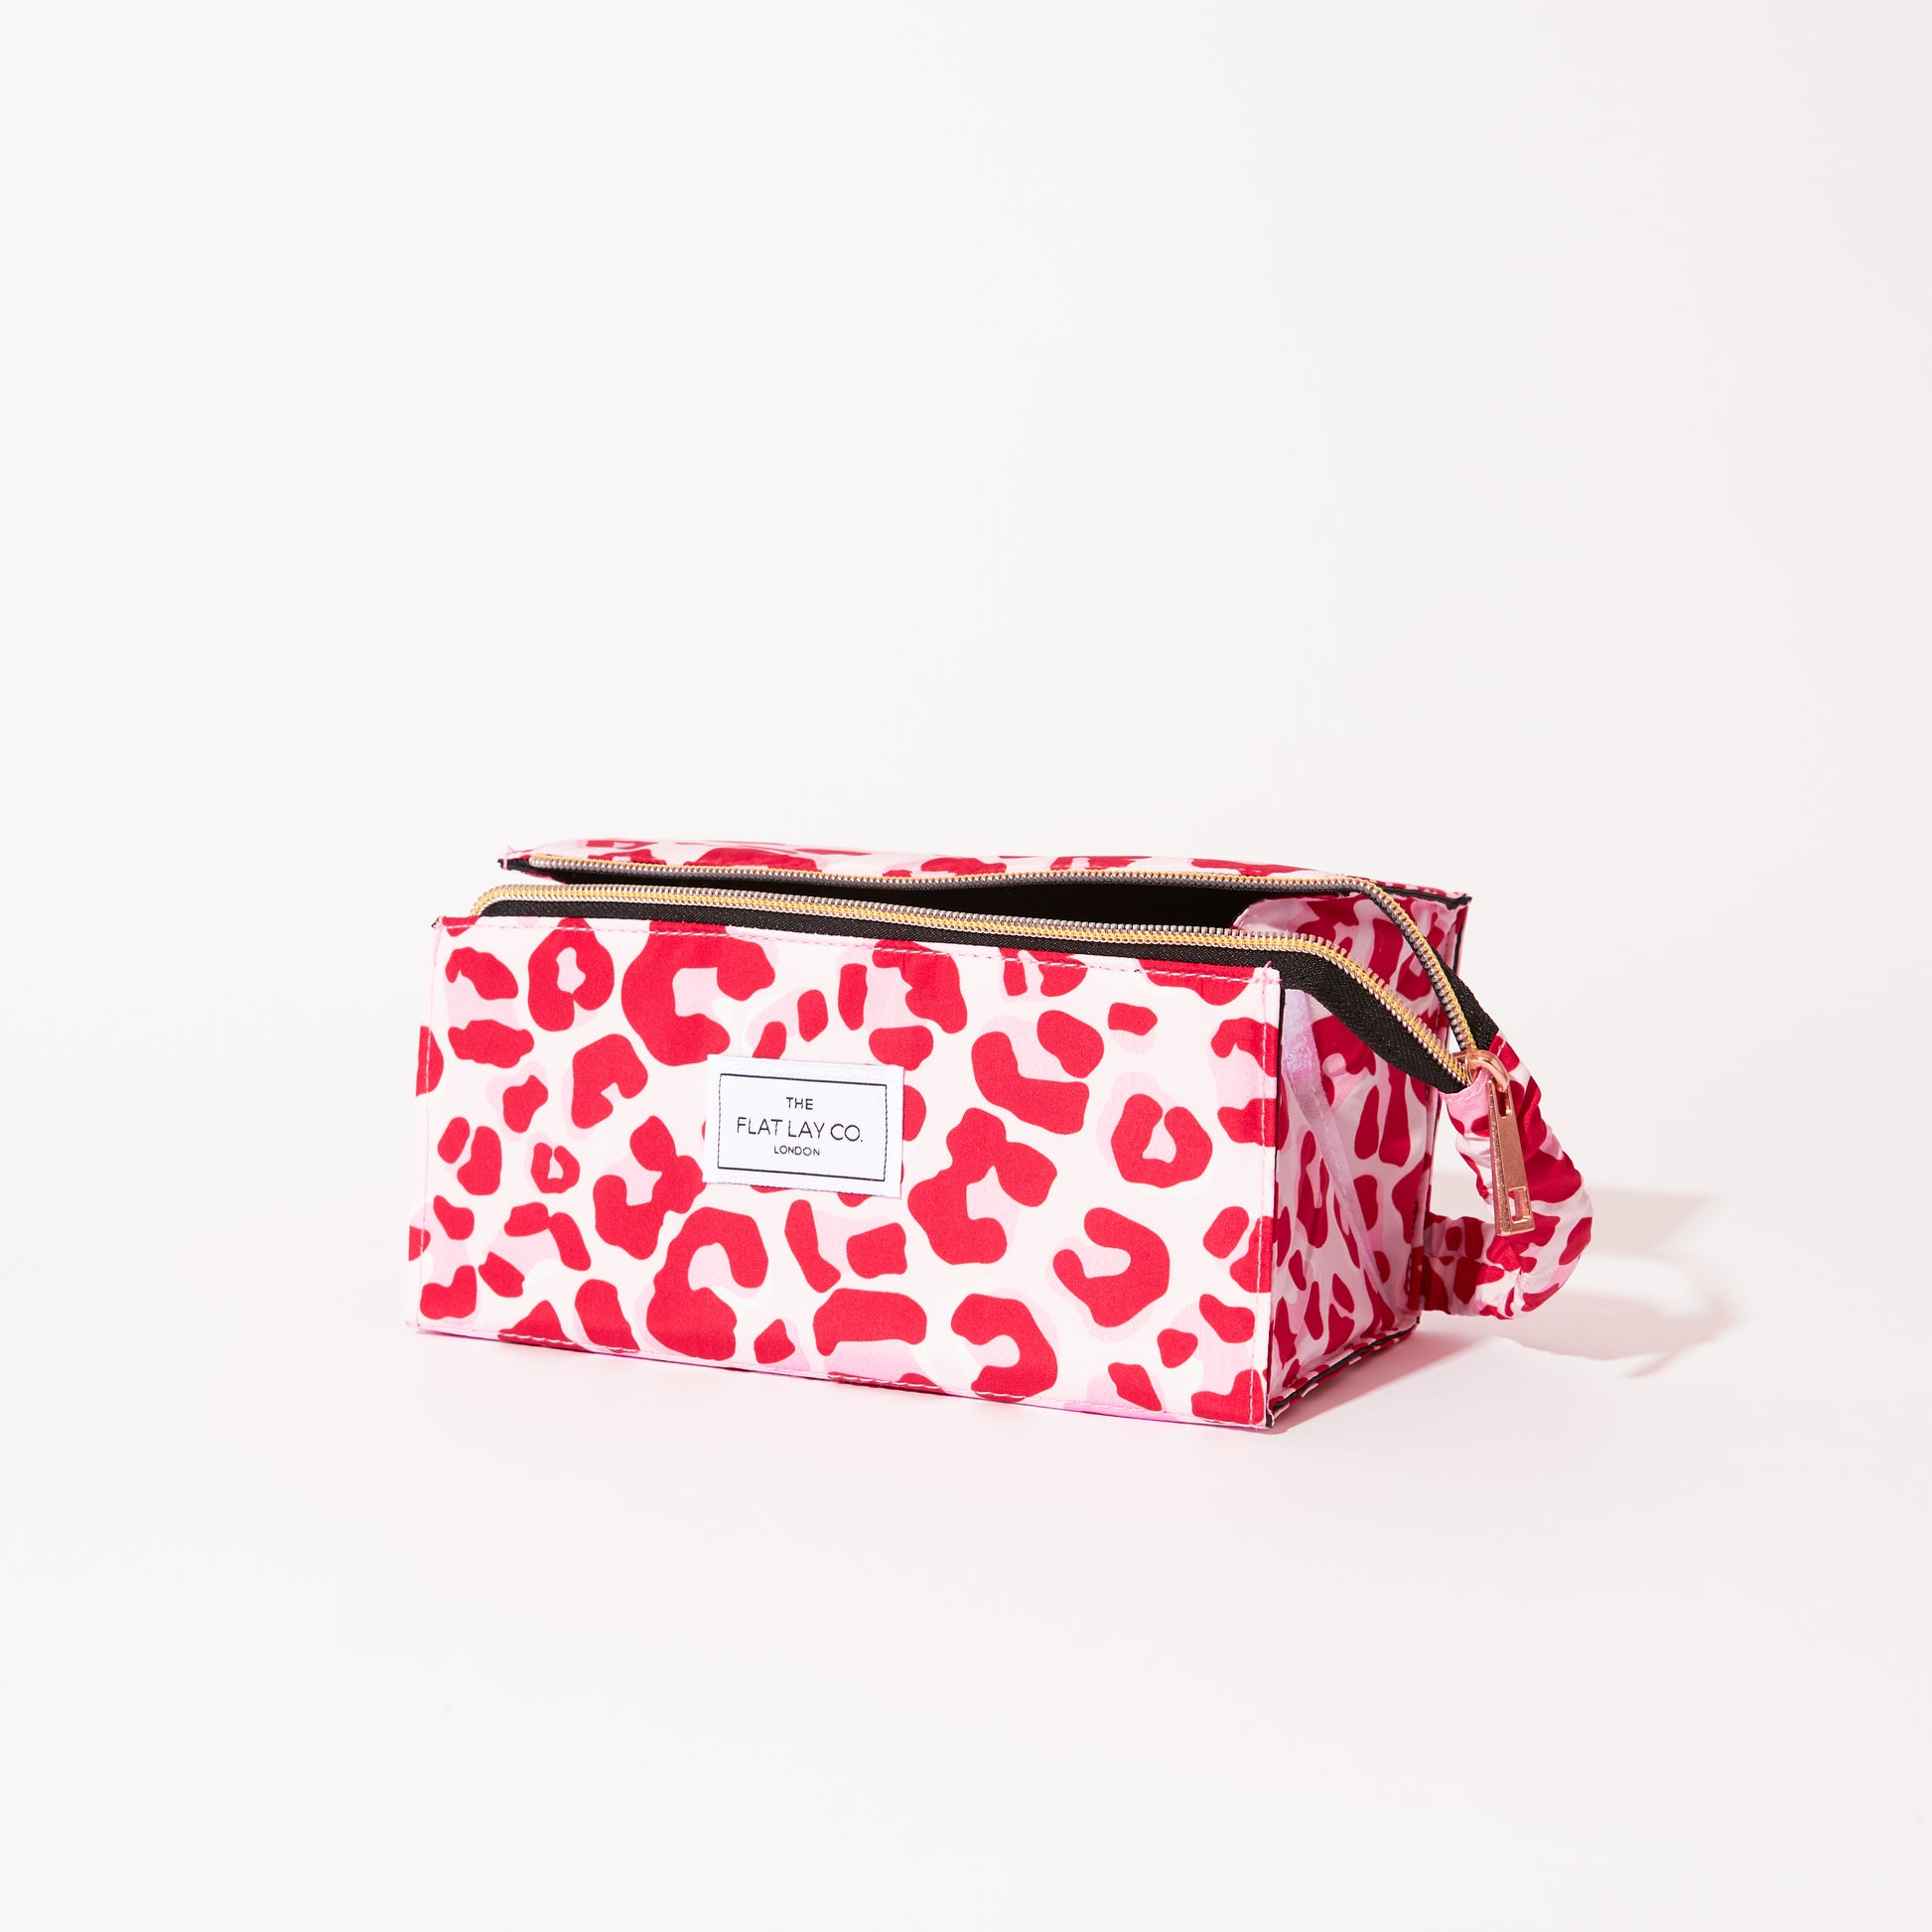 Vegan Leather Hot Pink Makeup Bag Pink Leopard Print - Girly Pink Cheetah  Print Cute Cosmetic Bag for Women - Leopard Print Purse Storage for Makeup  Accessories Toiletry Items & Pink Stuff